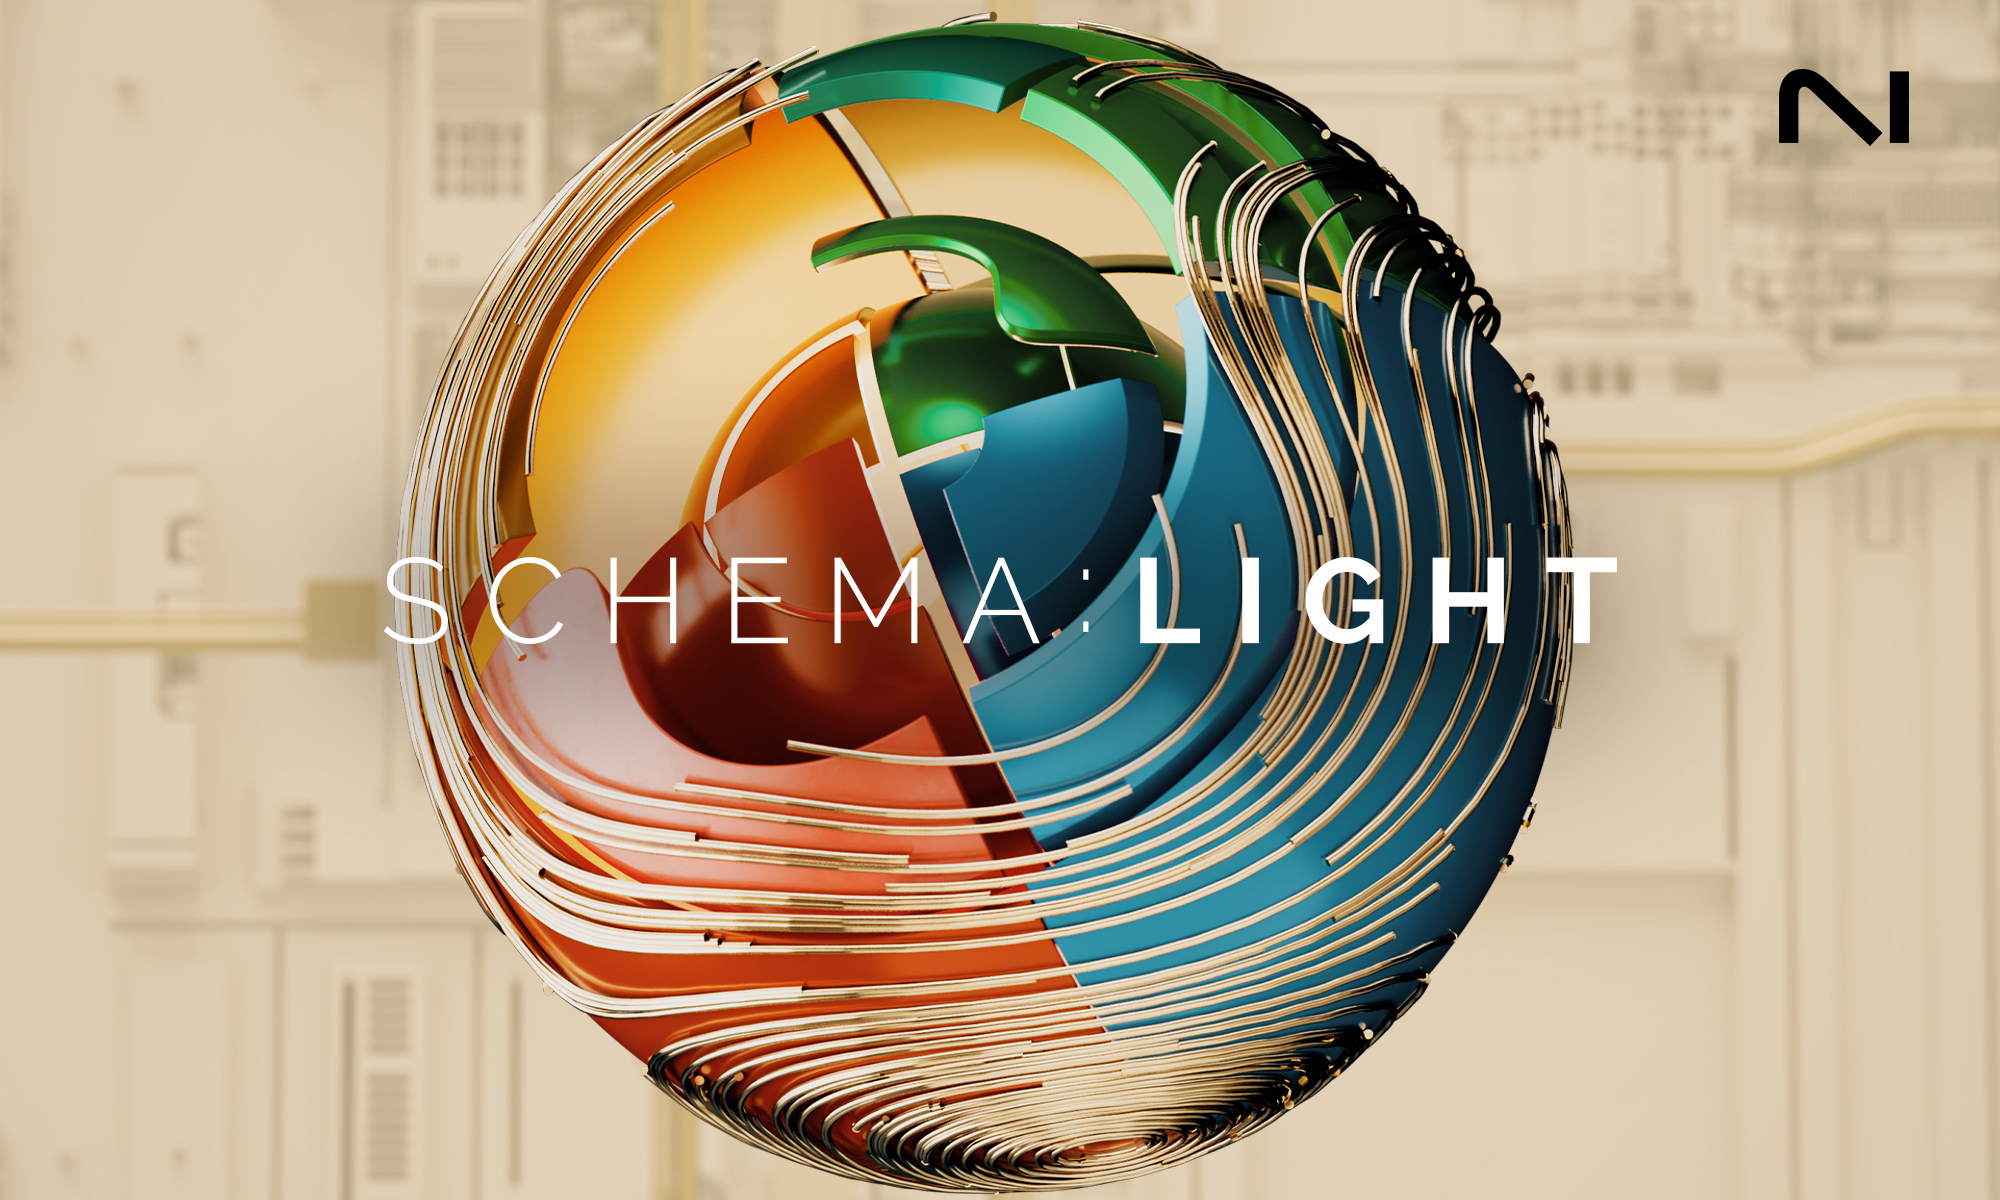 Schema-Light-manual-cover-2000x1200px.jpg